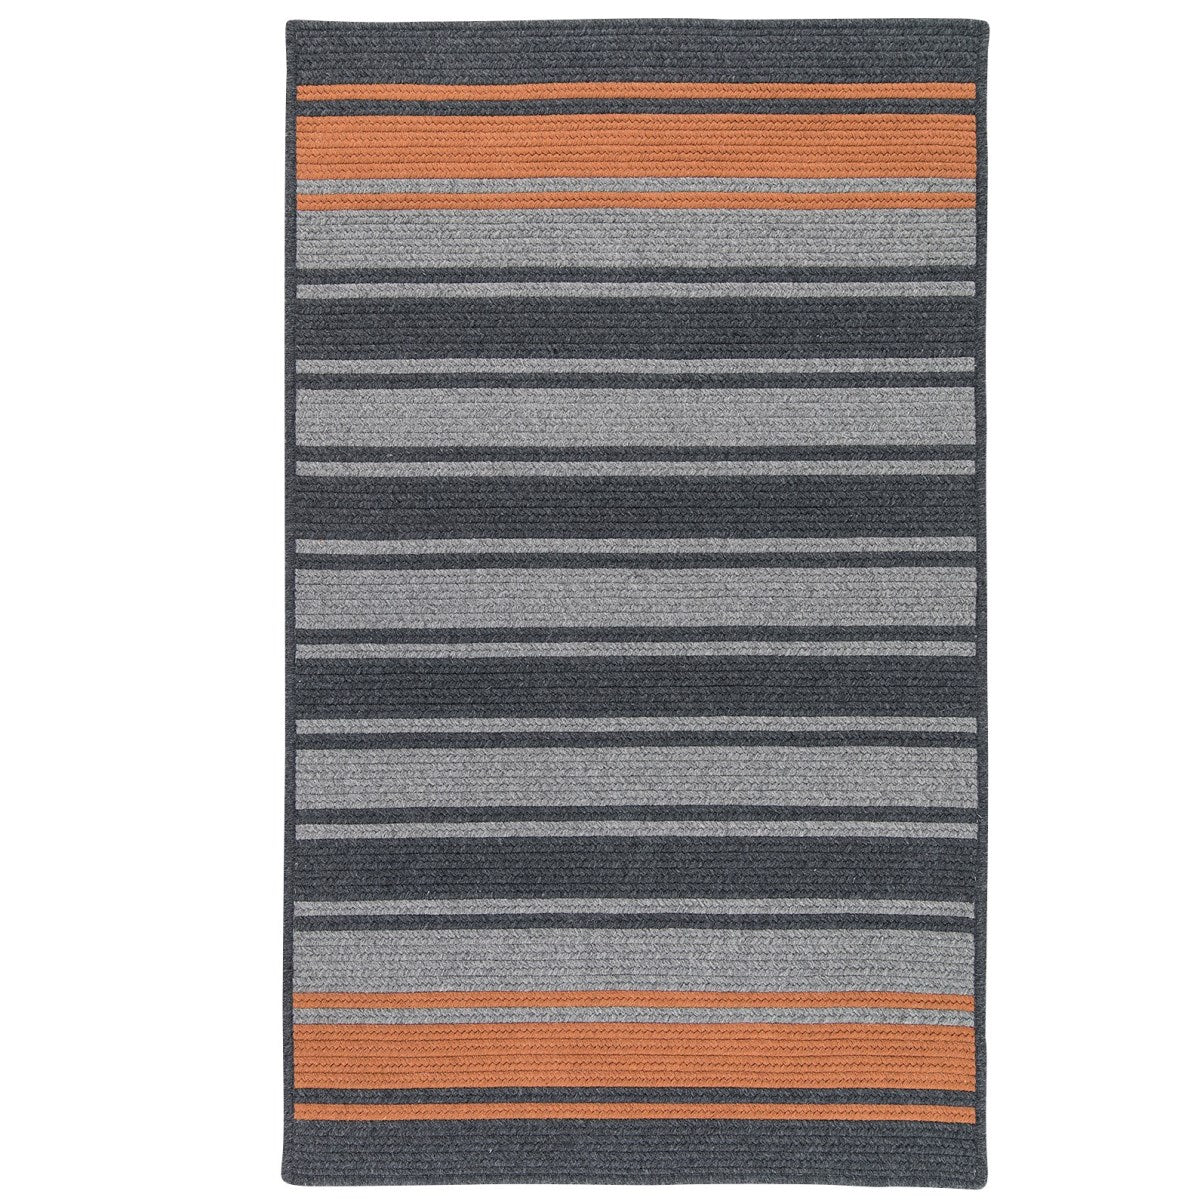 Frazada Stripe Charcoal -Orange Outdoor Braided Rectangular Rugs